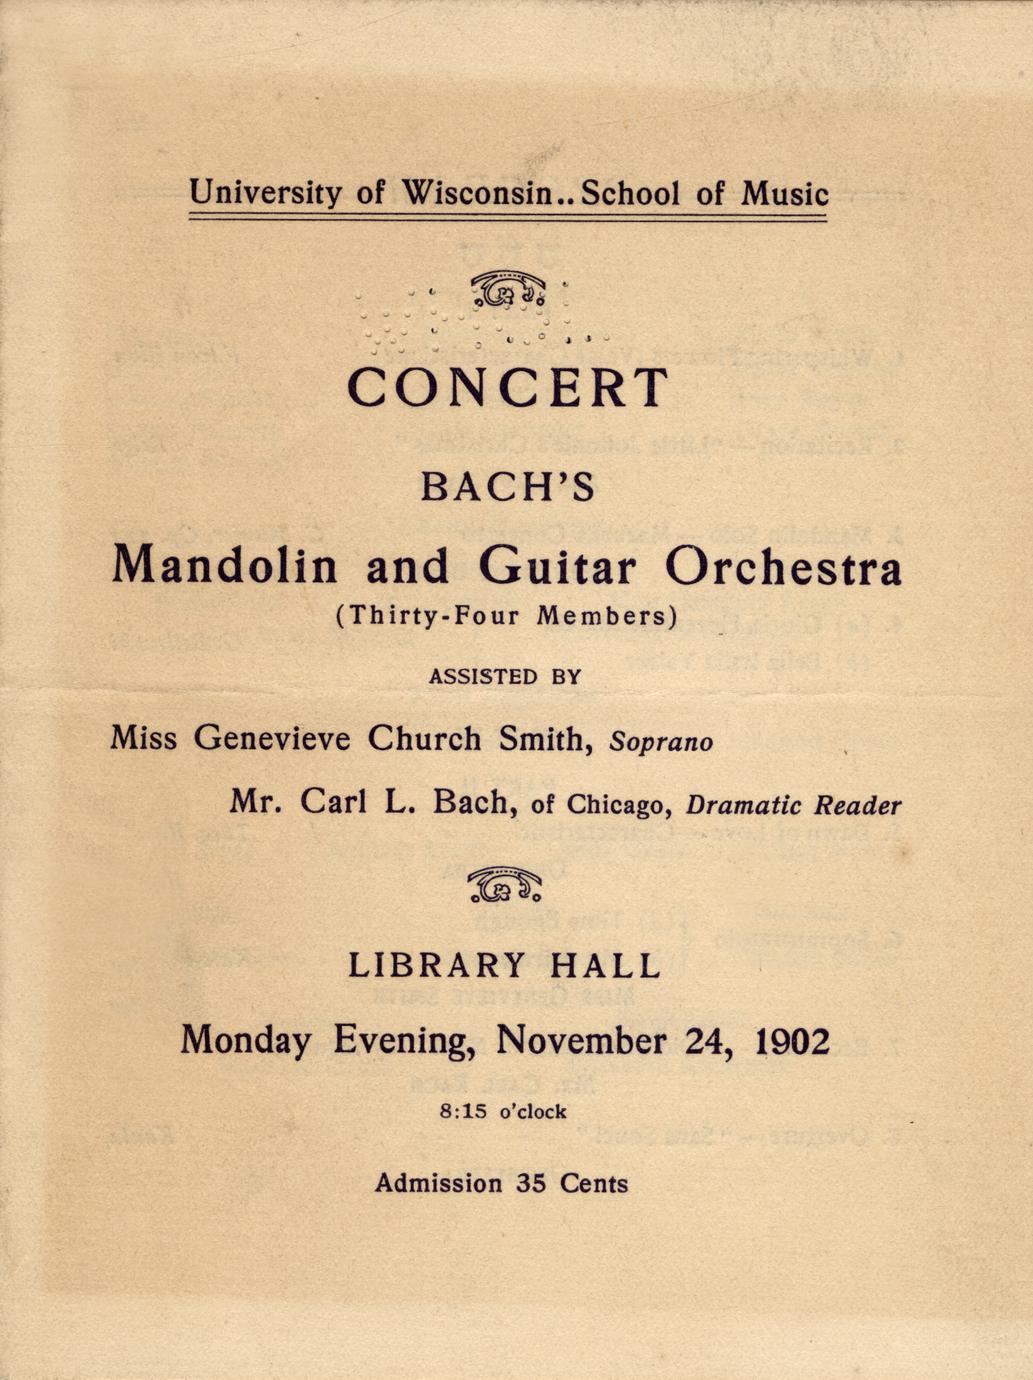 "Bach's Mandolin and Guitar Orchestra Concert" program